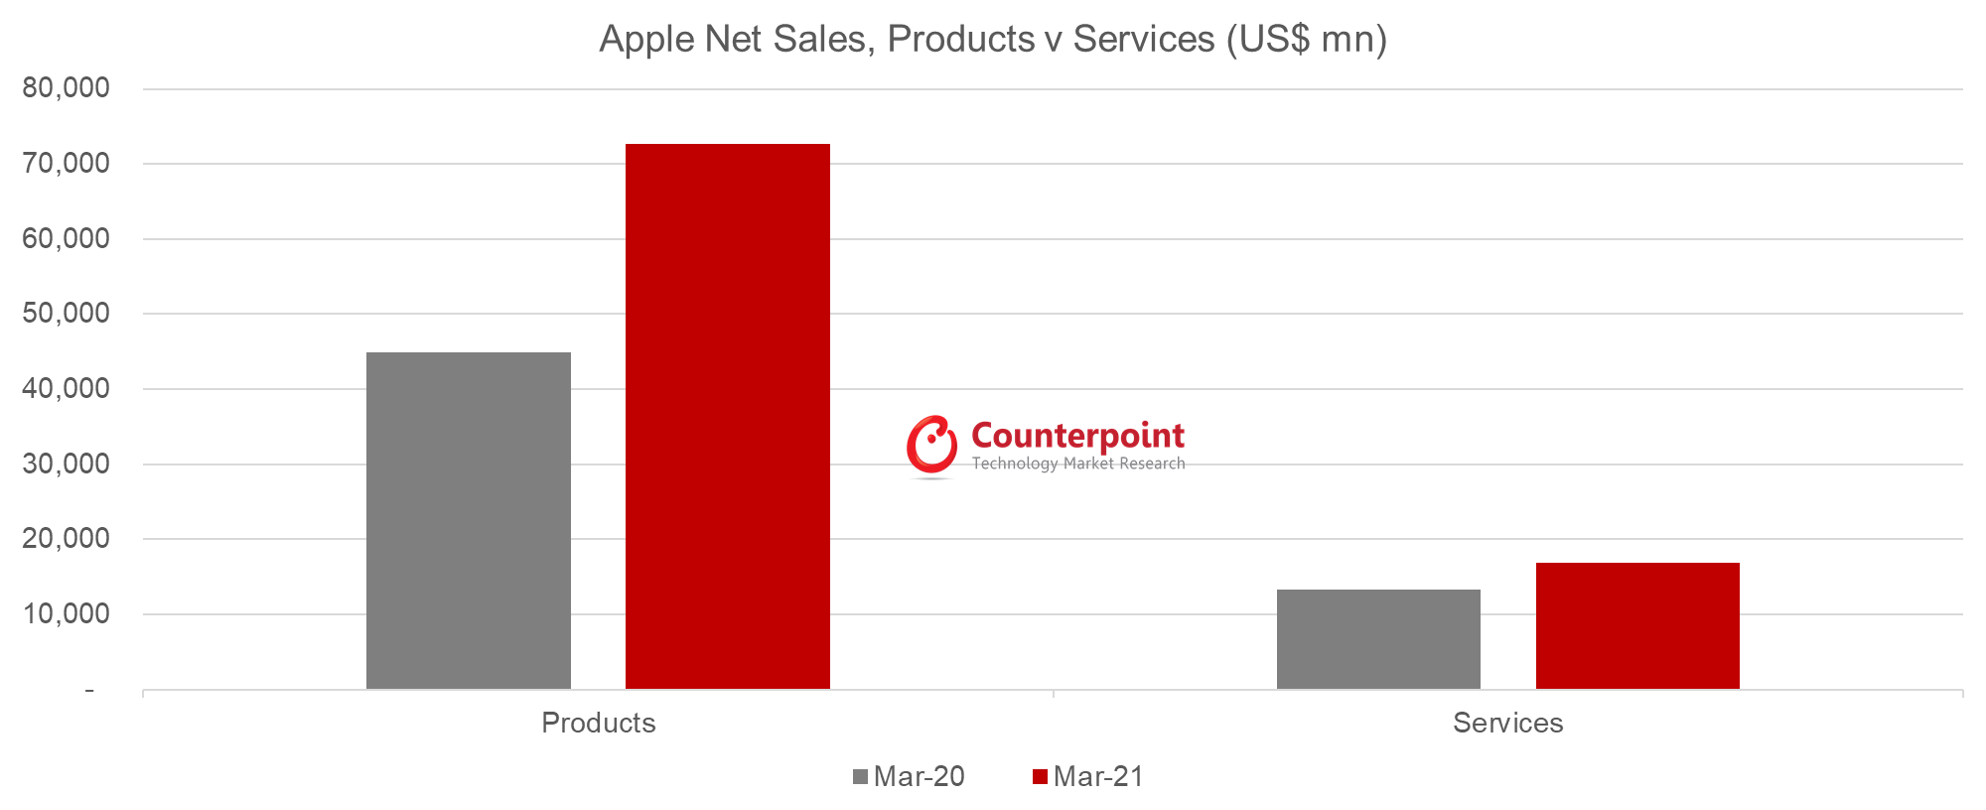 Counterpoint Research苹果净销售额、产品与服务